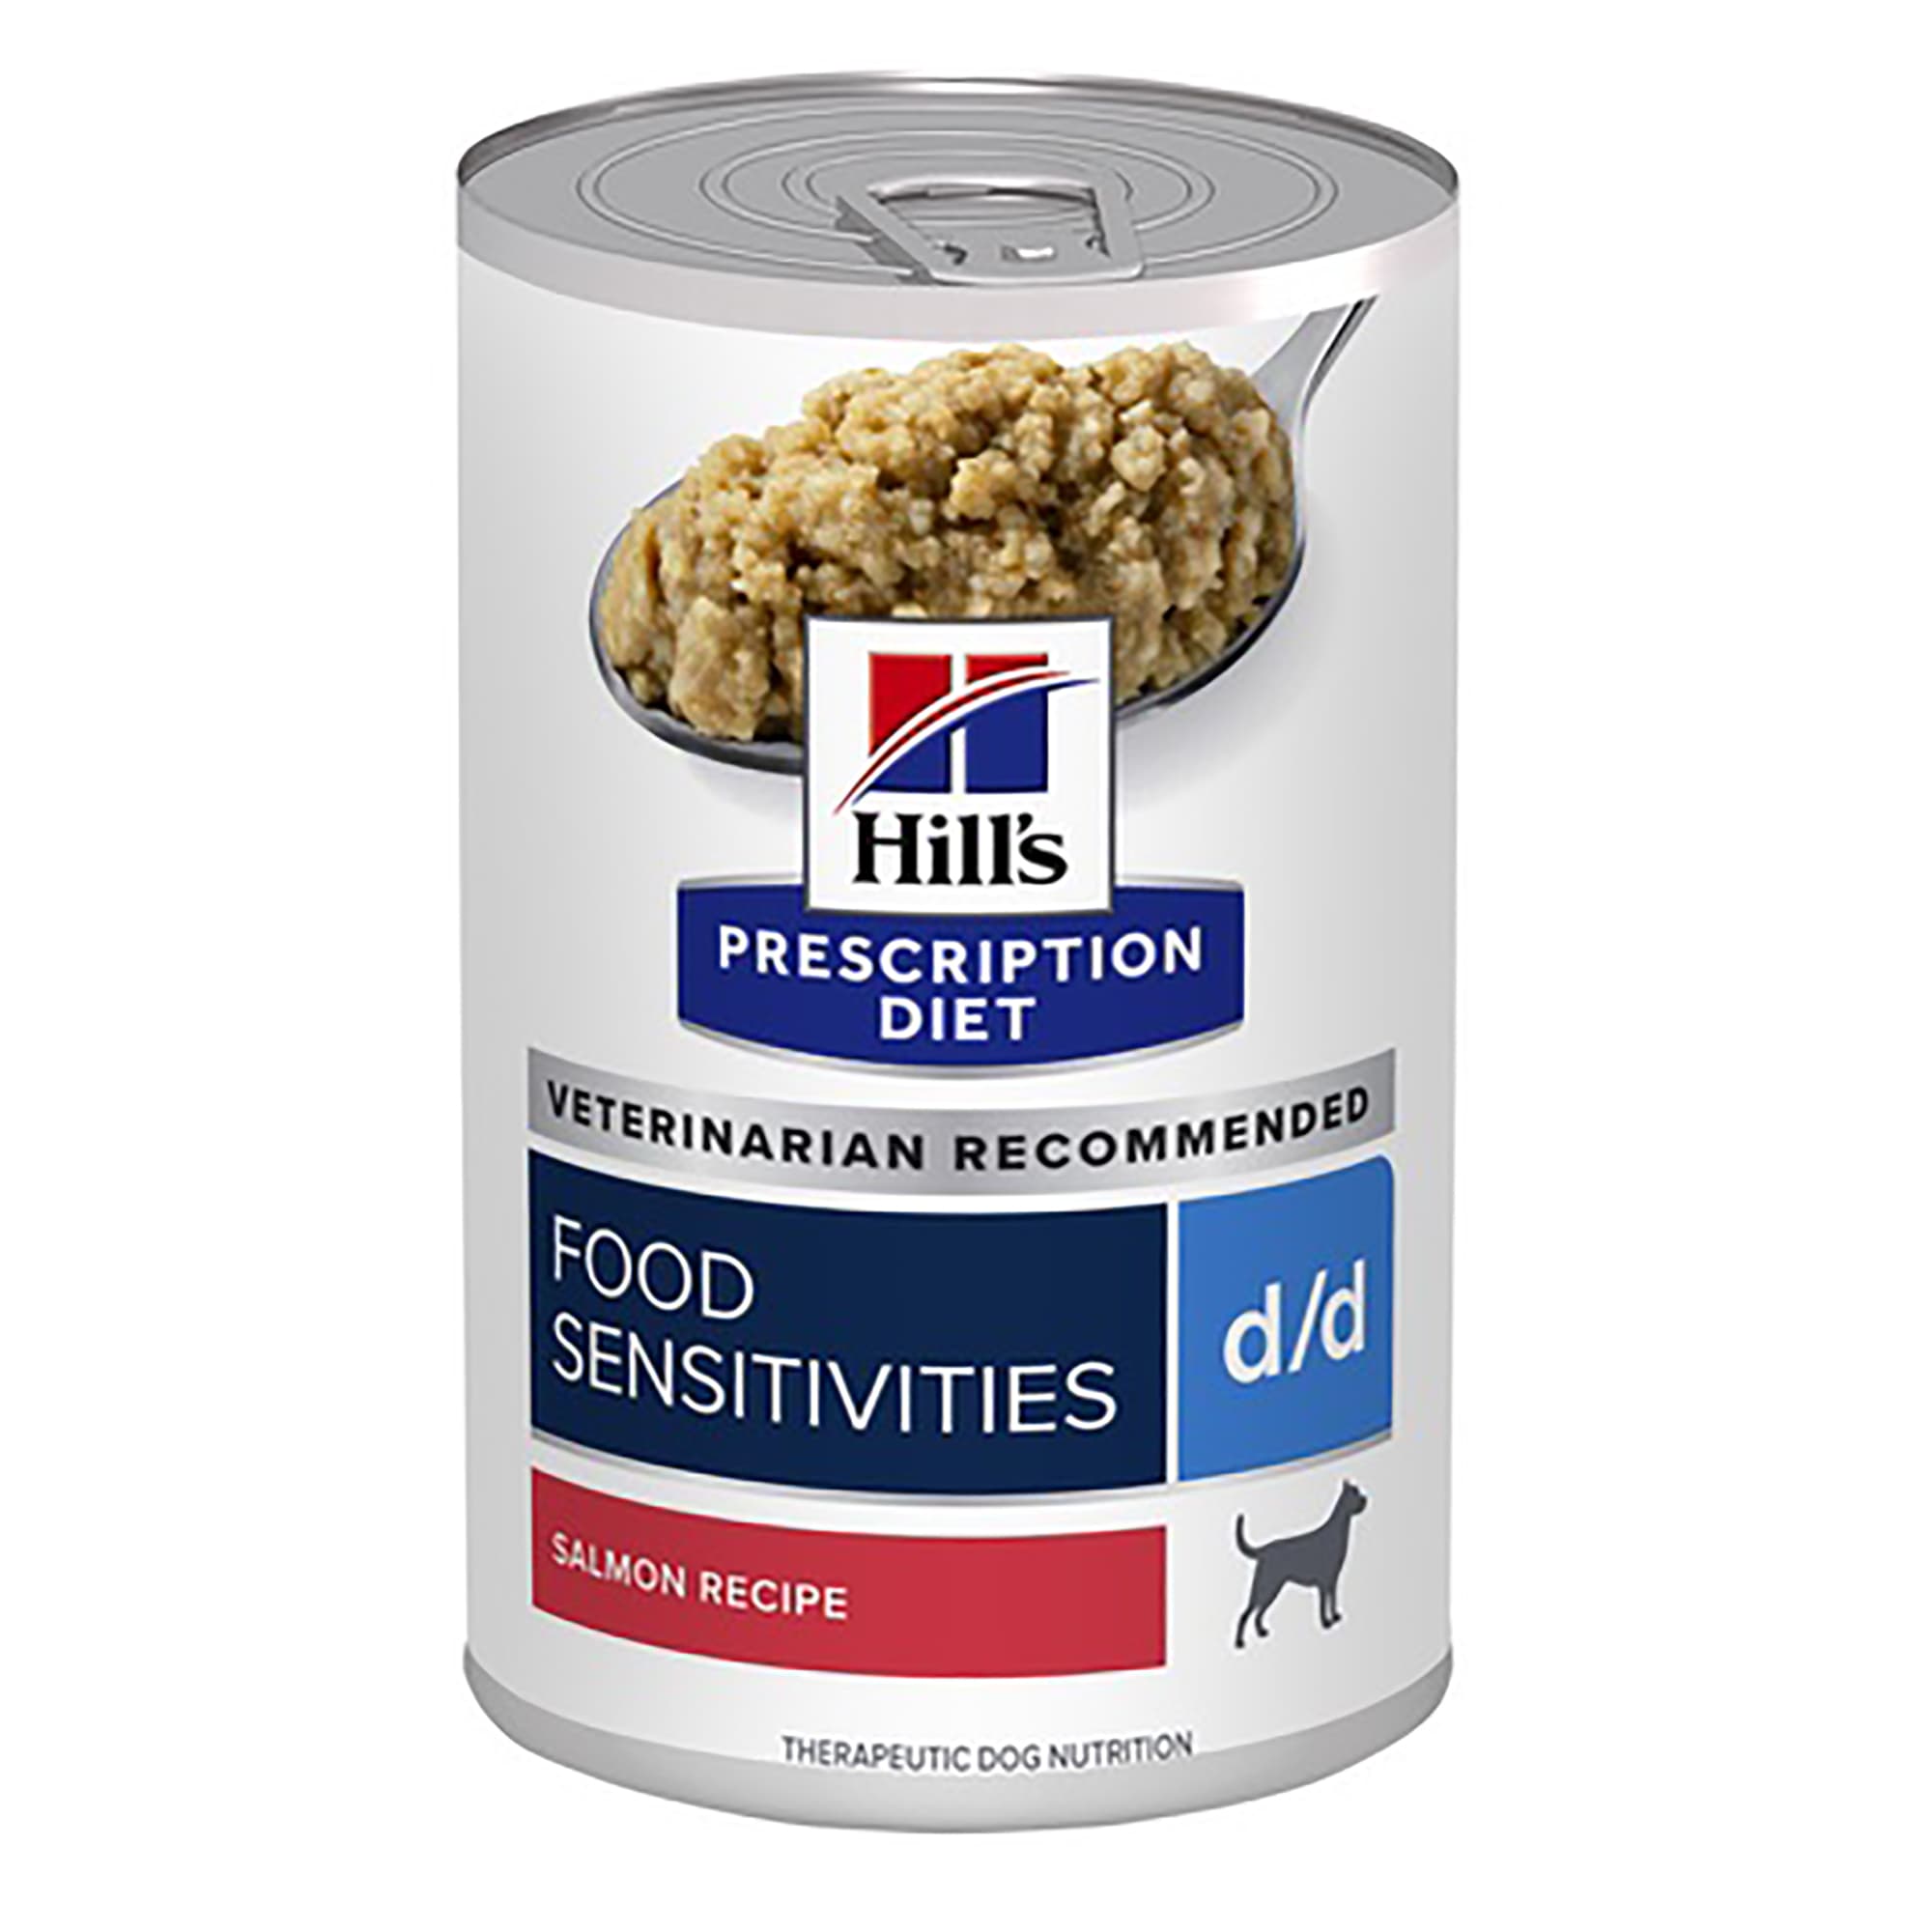 Photos - Dog Food Hills Hill's Prescription Diet Hill's Prescription Diet d/d Food Sensitivities S 